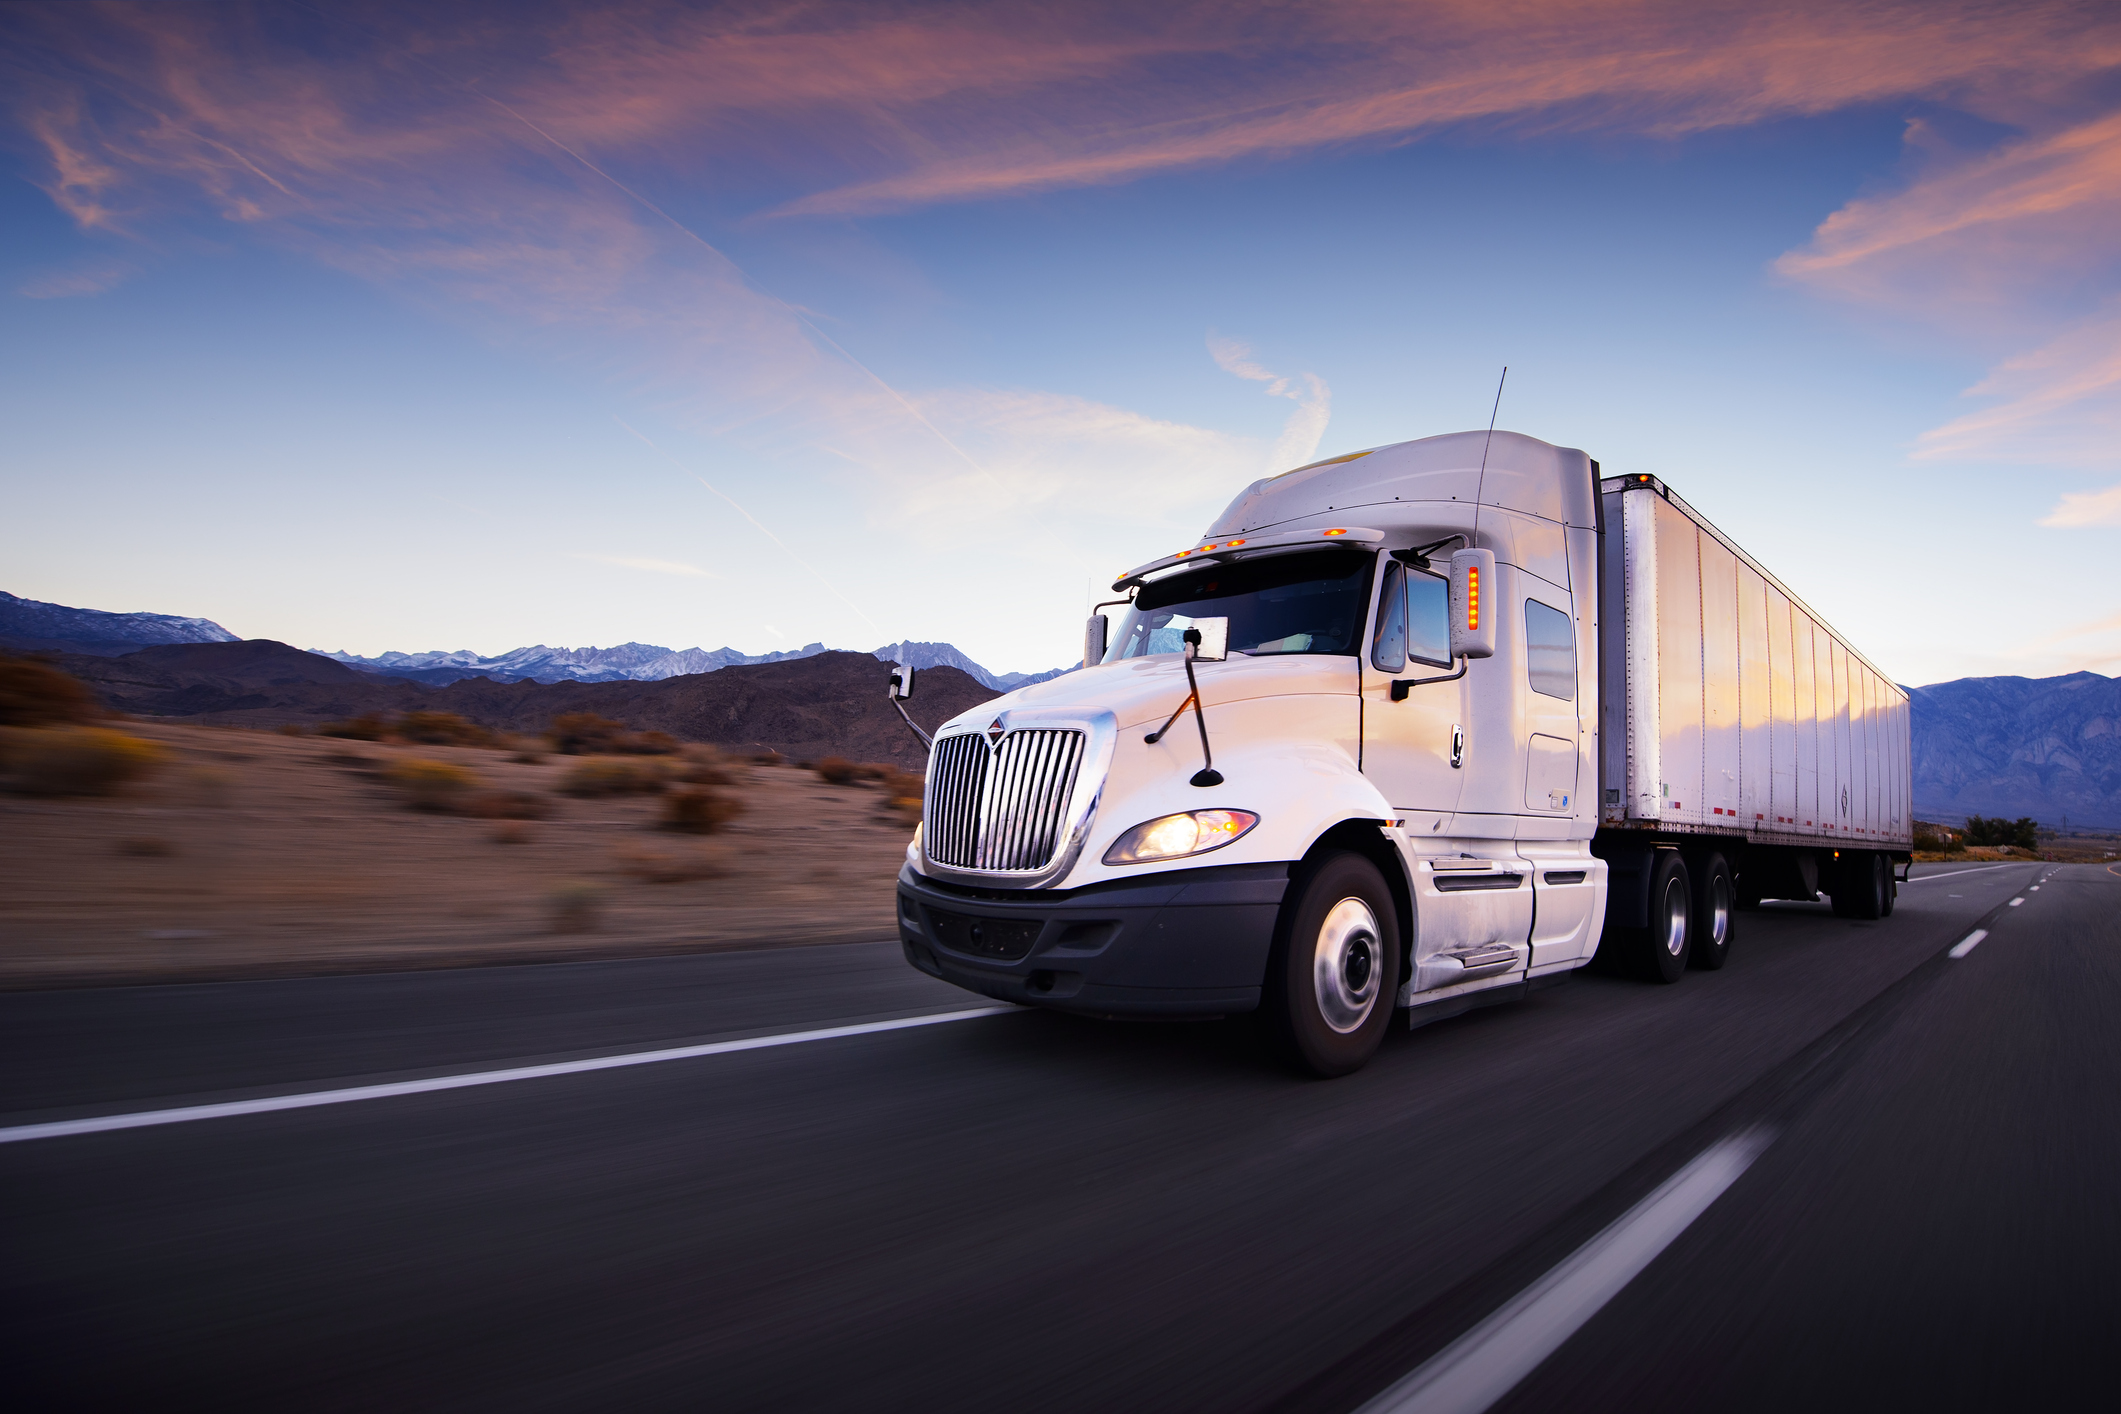 Defensive Driving – Industrial Trucks